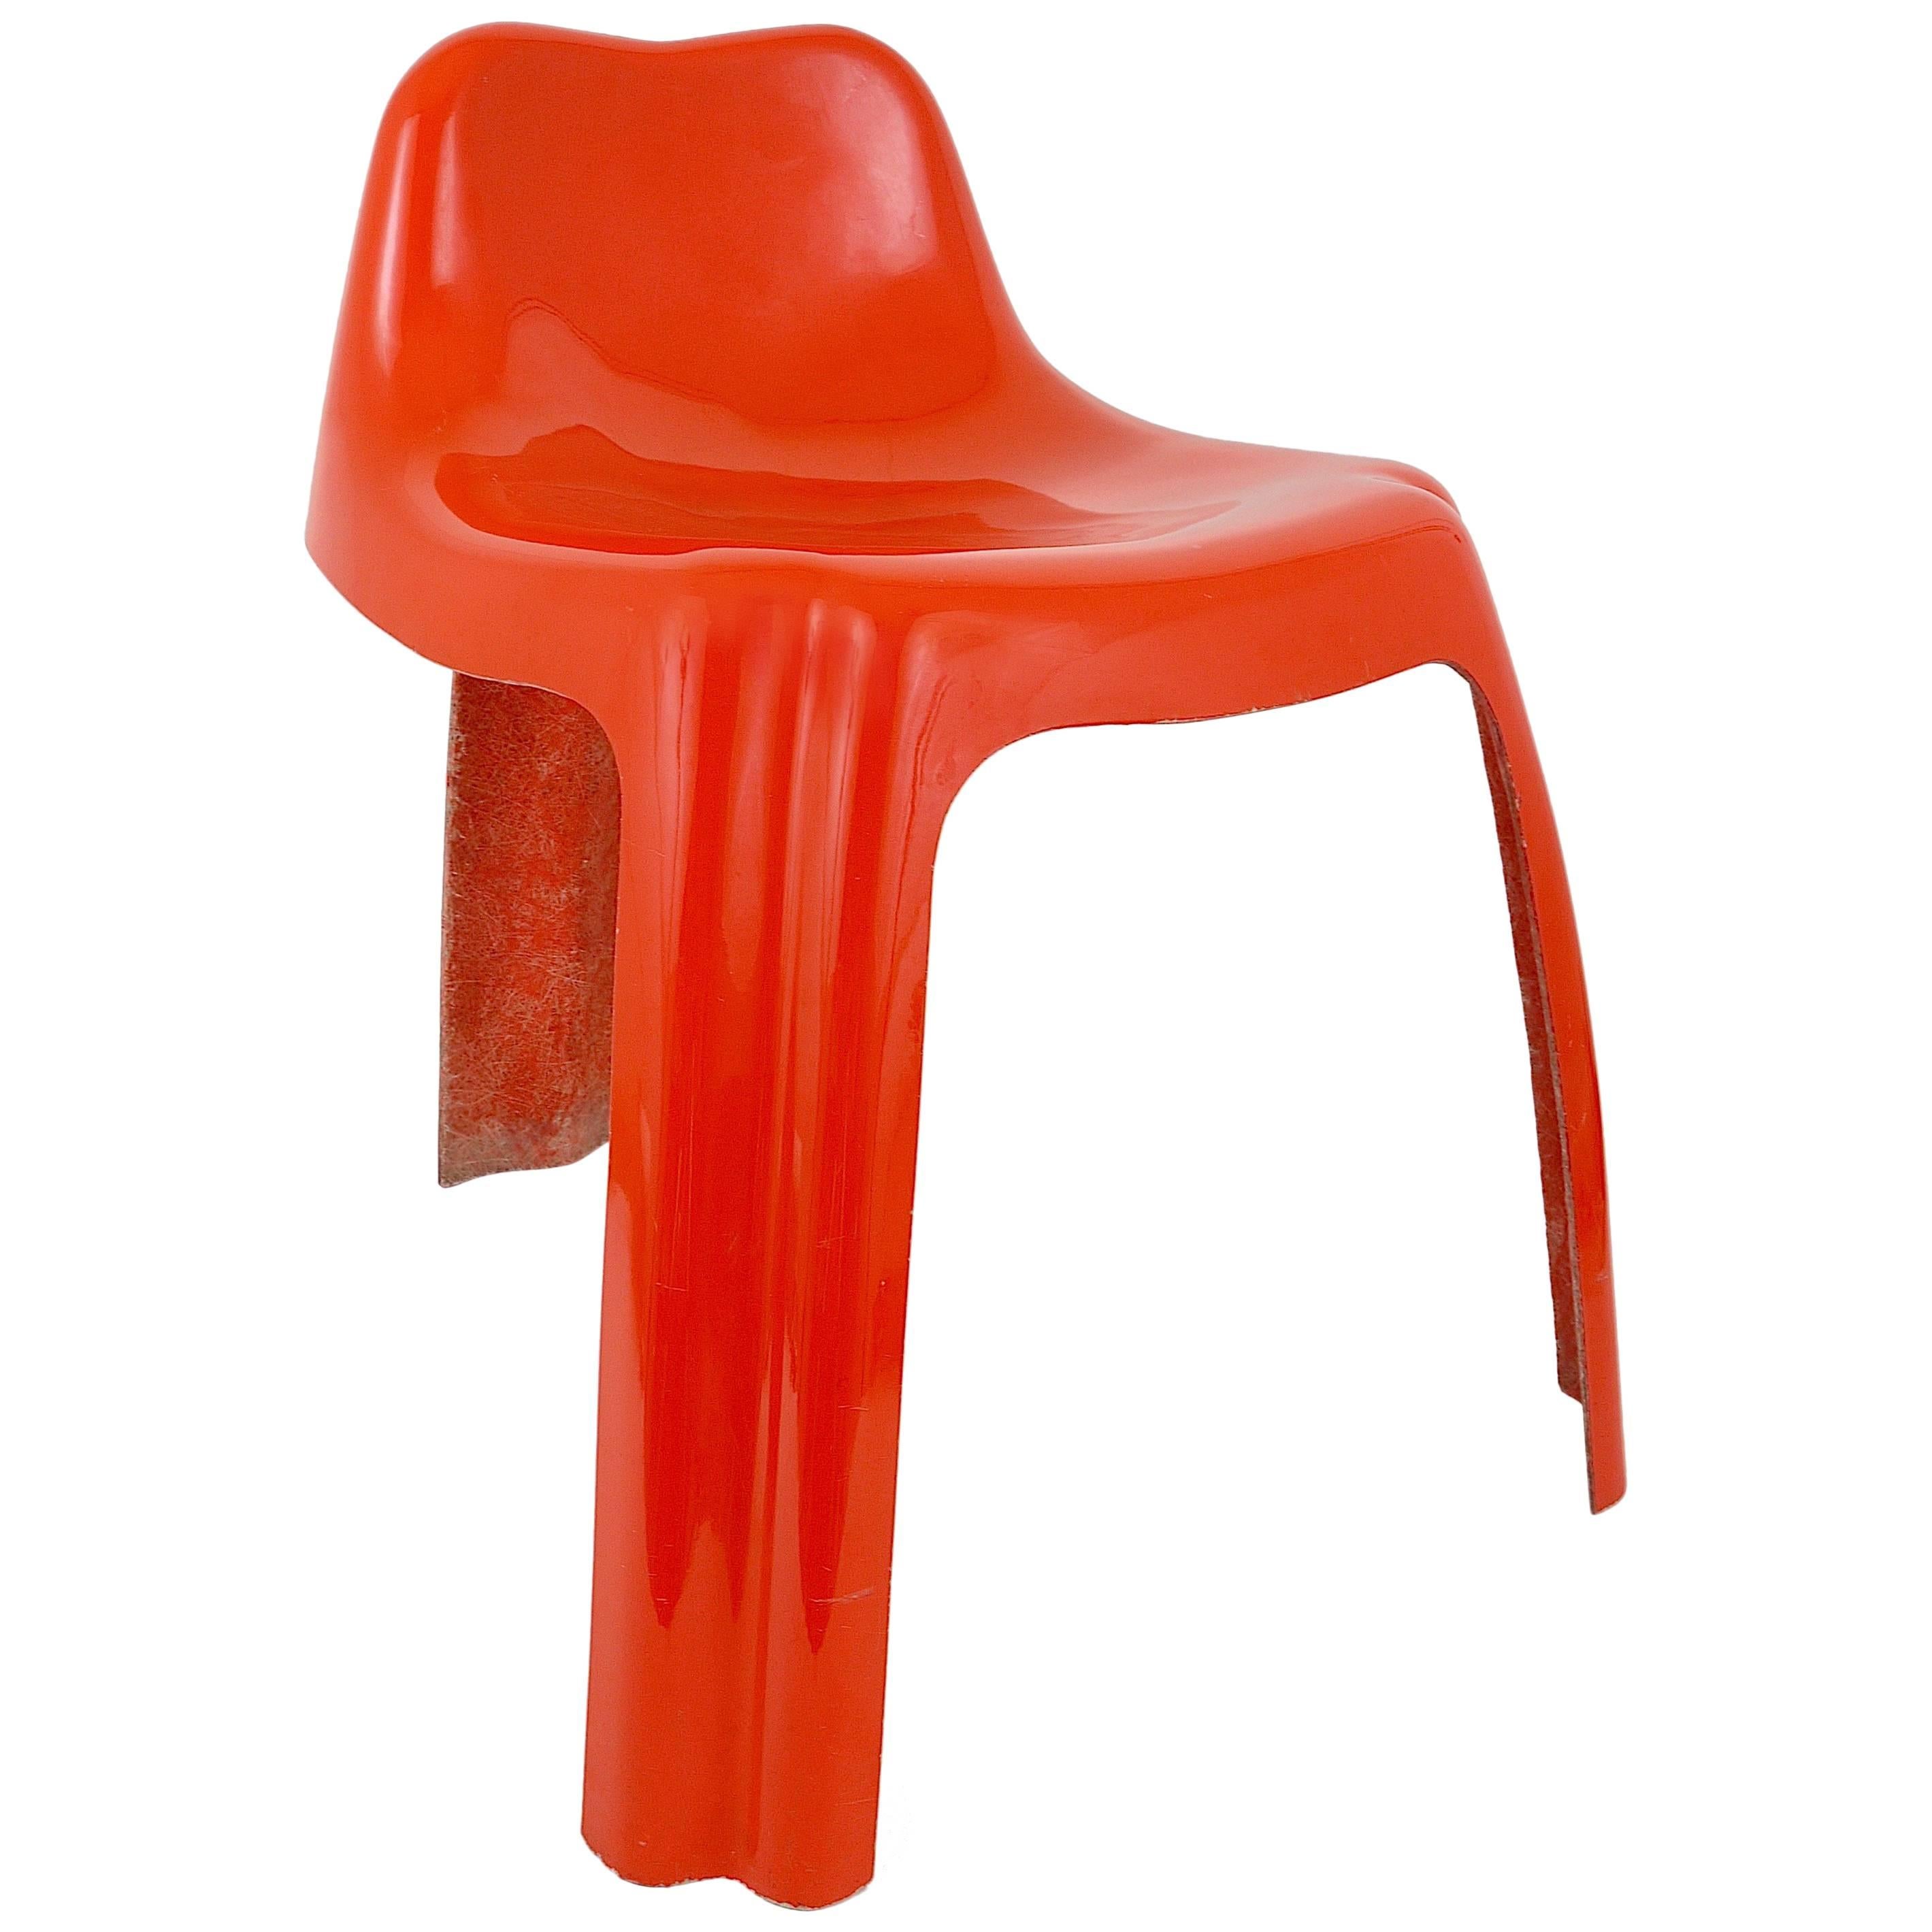 Patrick Gingembre Ginger Orange Fiberglass Chair Ginger, Paulus, France, 1970s